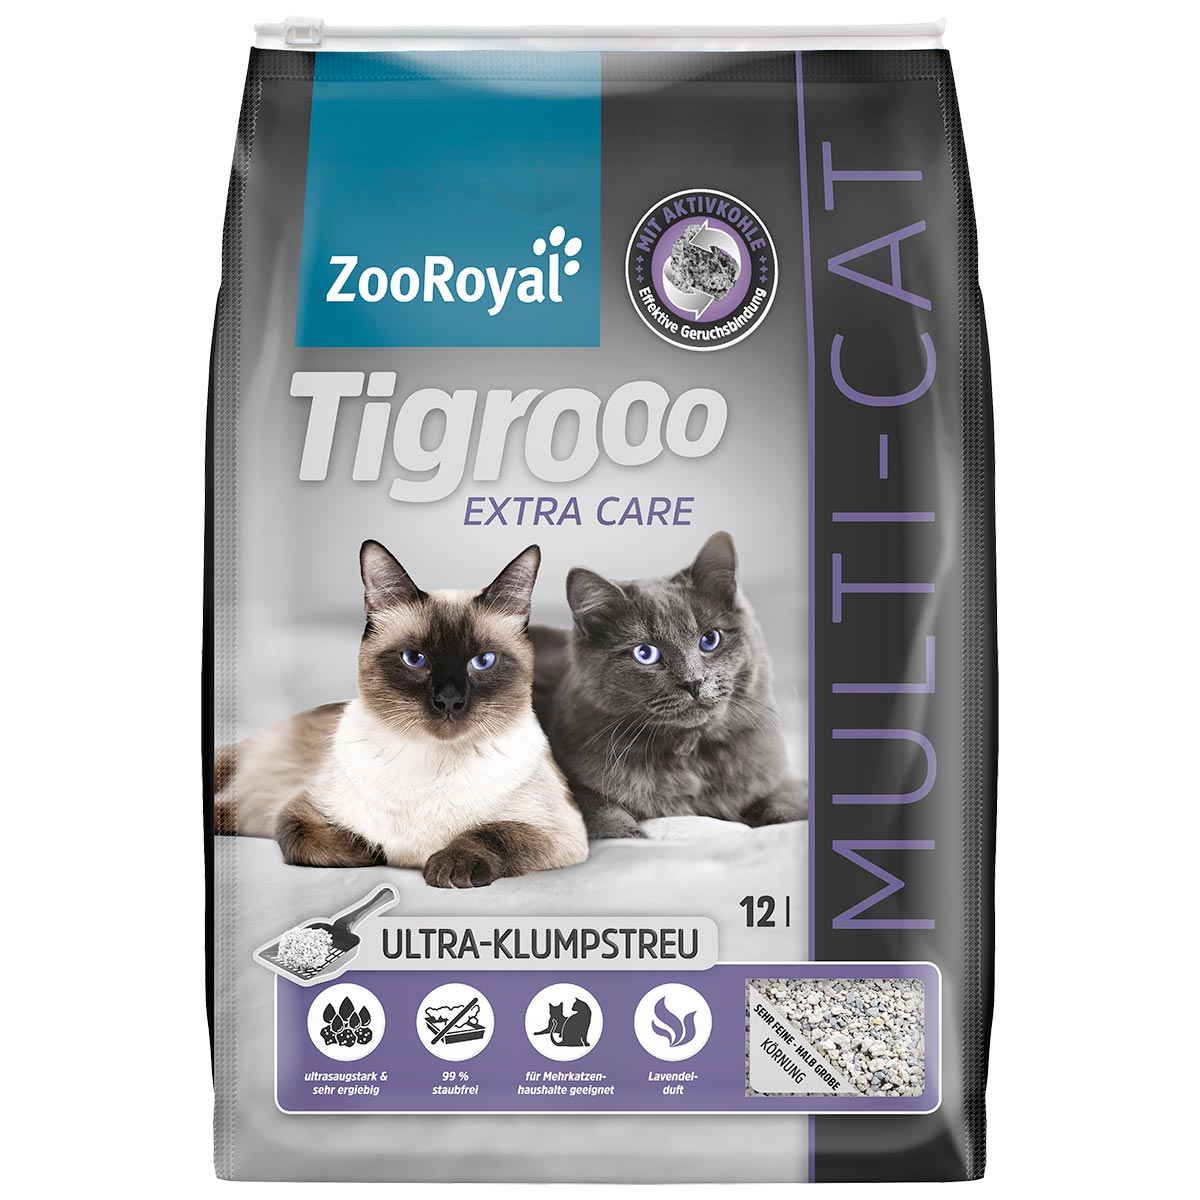 ZooRoyal Tigrooo Multi-Cat 12l